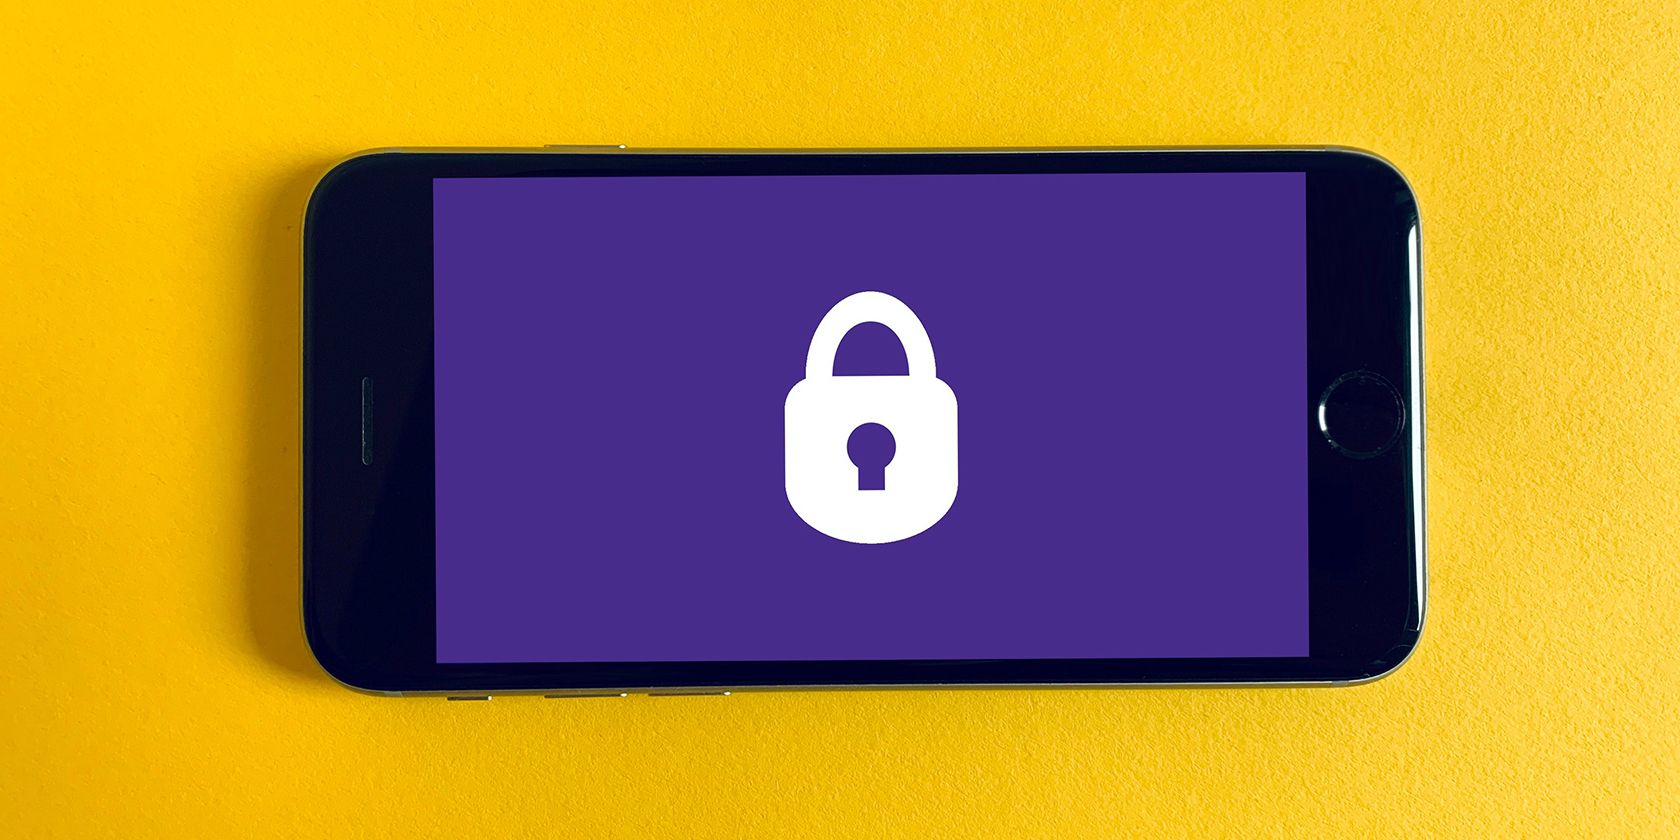 lock logo on a smartphone